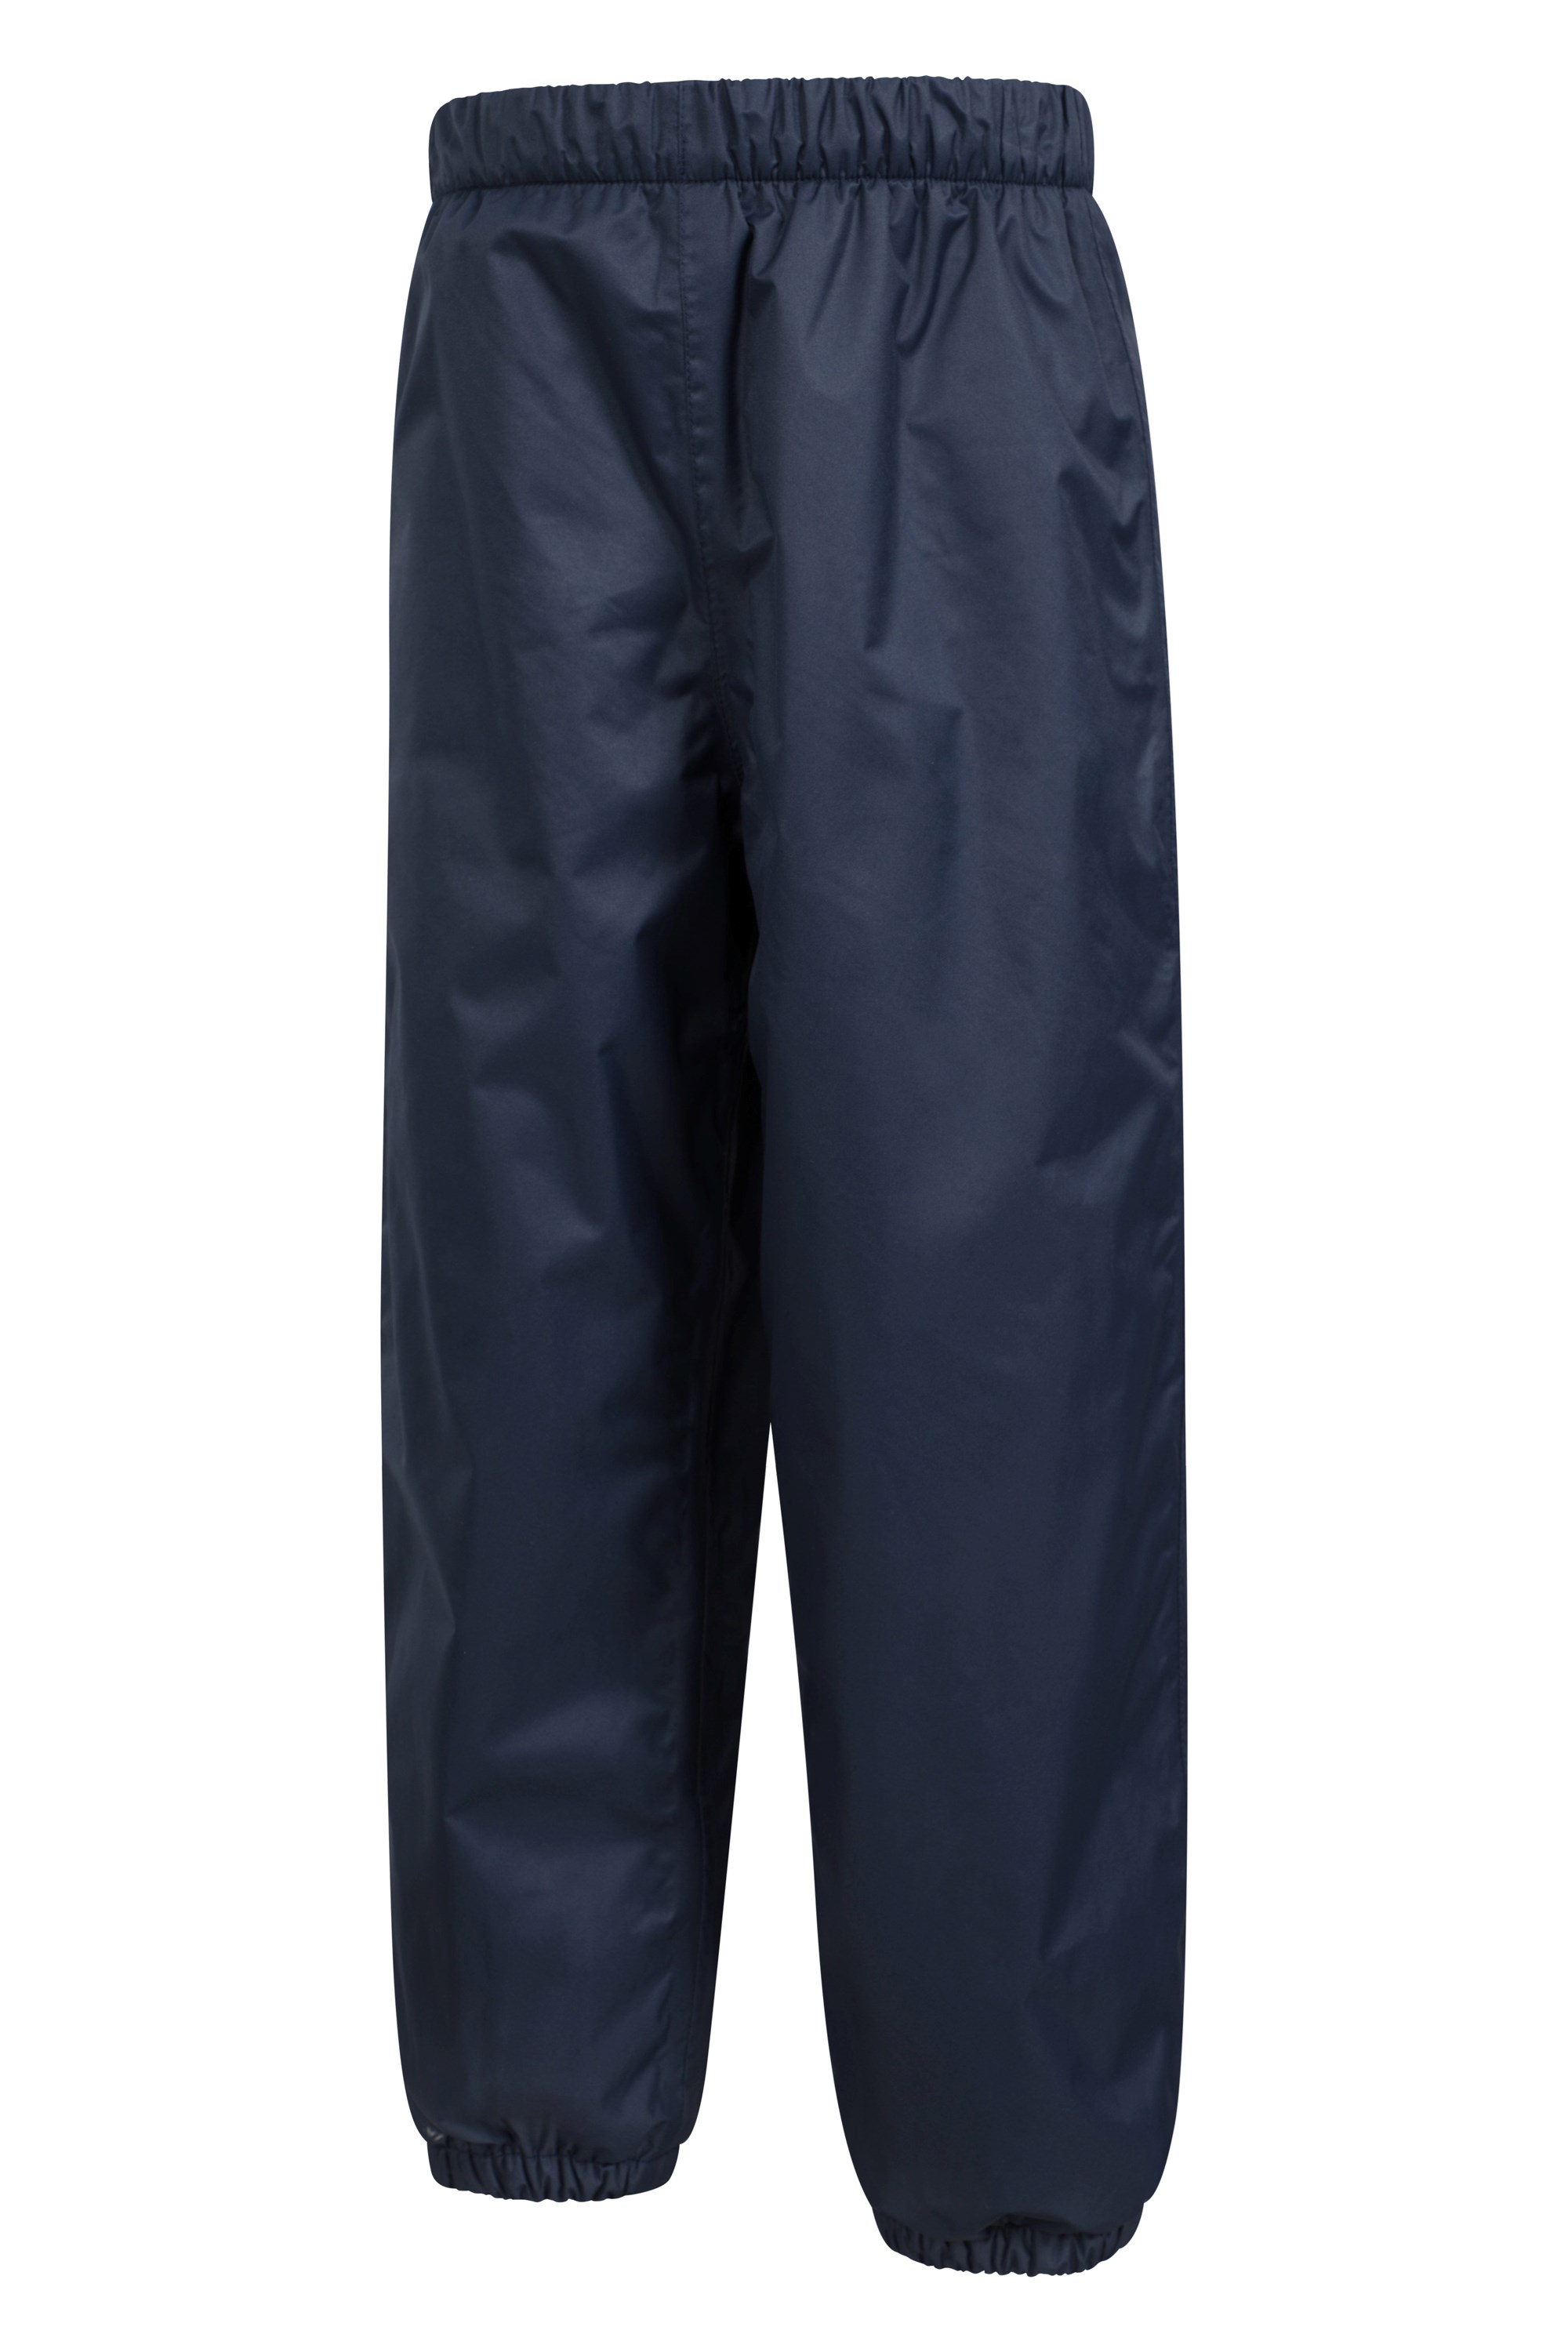 Kids Snow Pack: Fleece Lined Pants + Sunglasses + Wet Bag